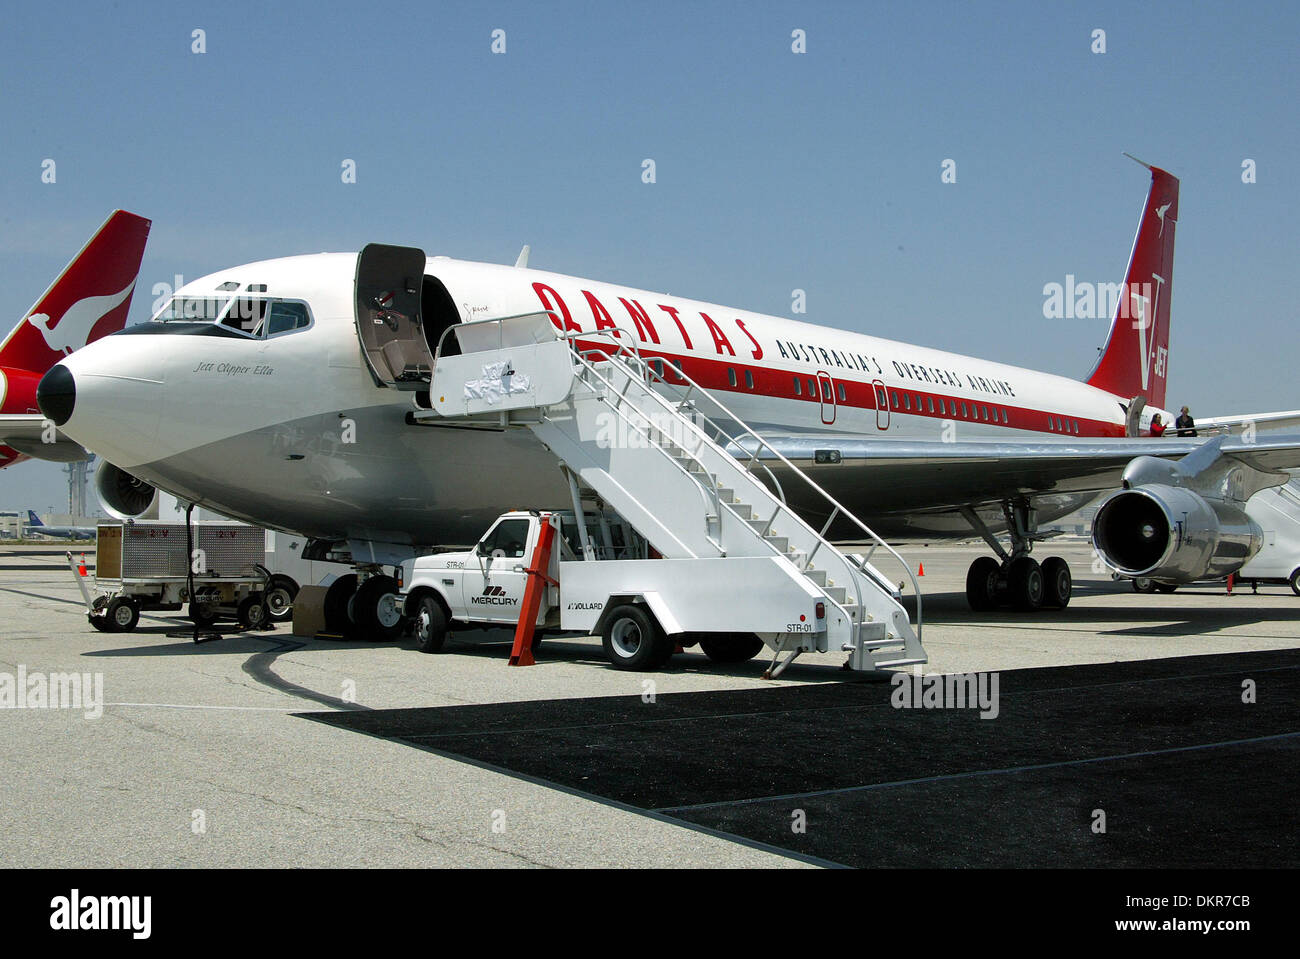 JOHN TRAVOLTA'S BOEING 707 JET.ACTORS JET PLANE. ANGELES, USA.LOS ANGELES AIRPORT [LAX], LOS.24/06/2002.LAB5385. Stock Photo